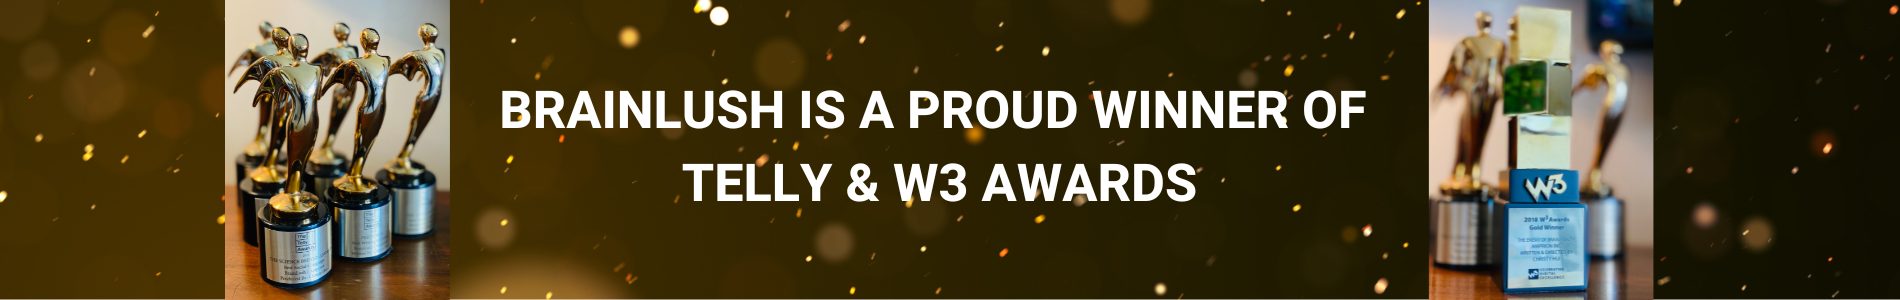 award-winning team-w3-telly awards